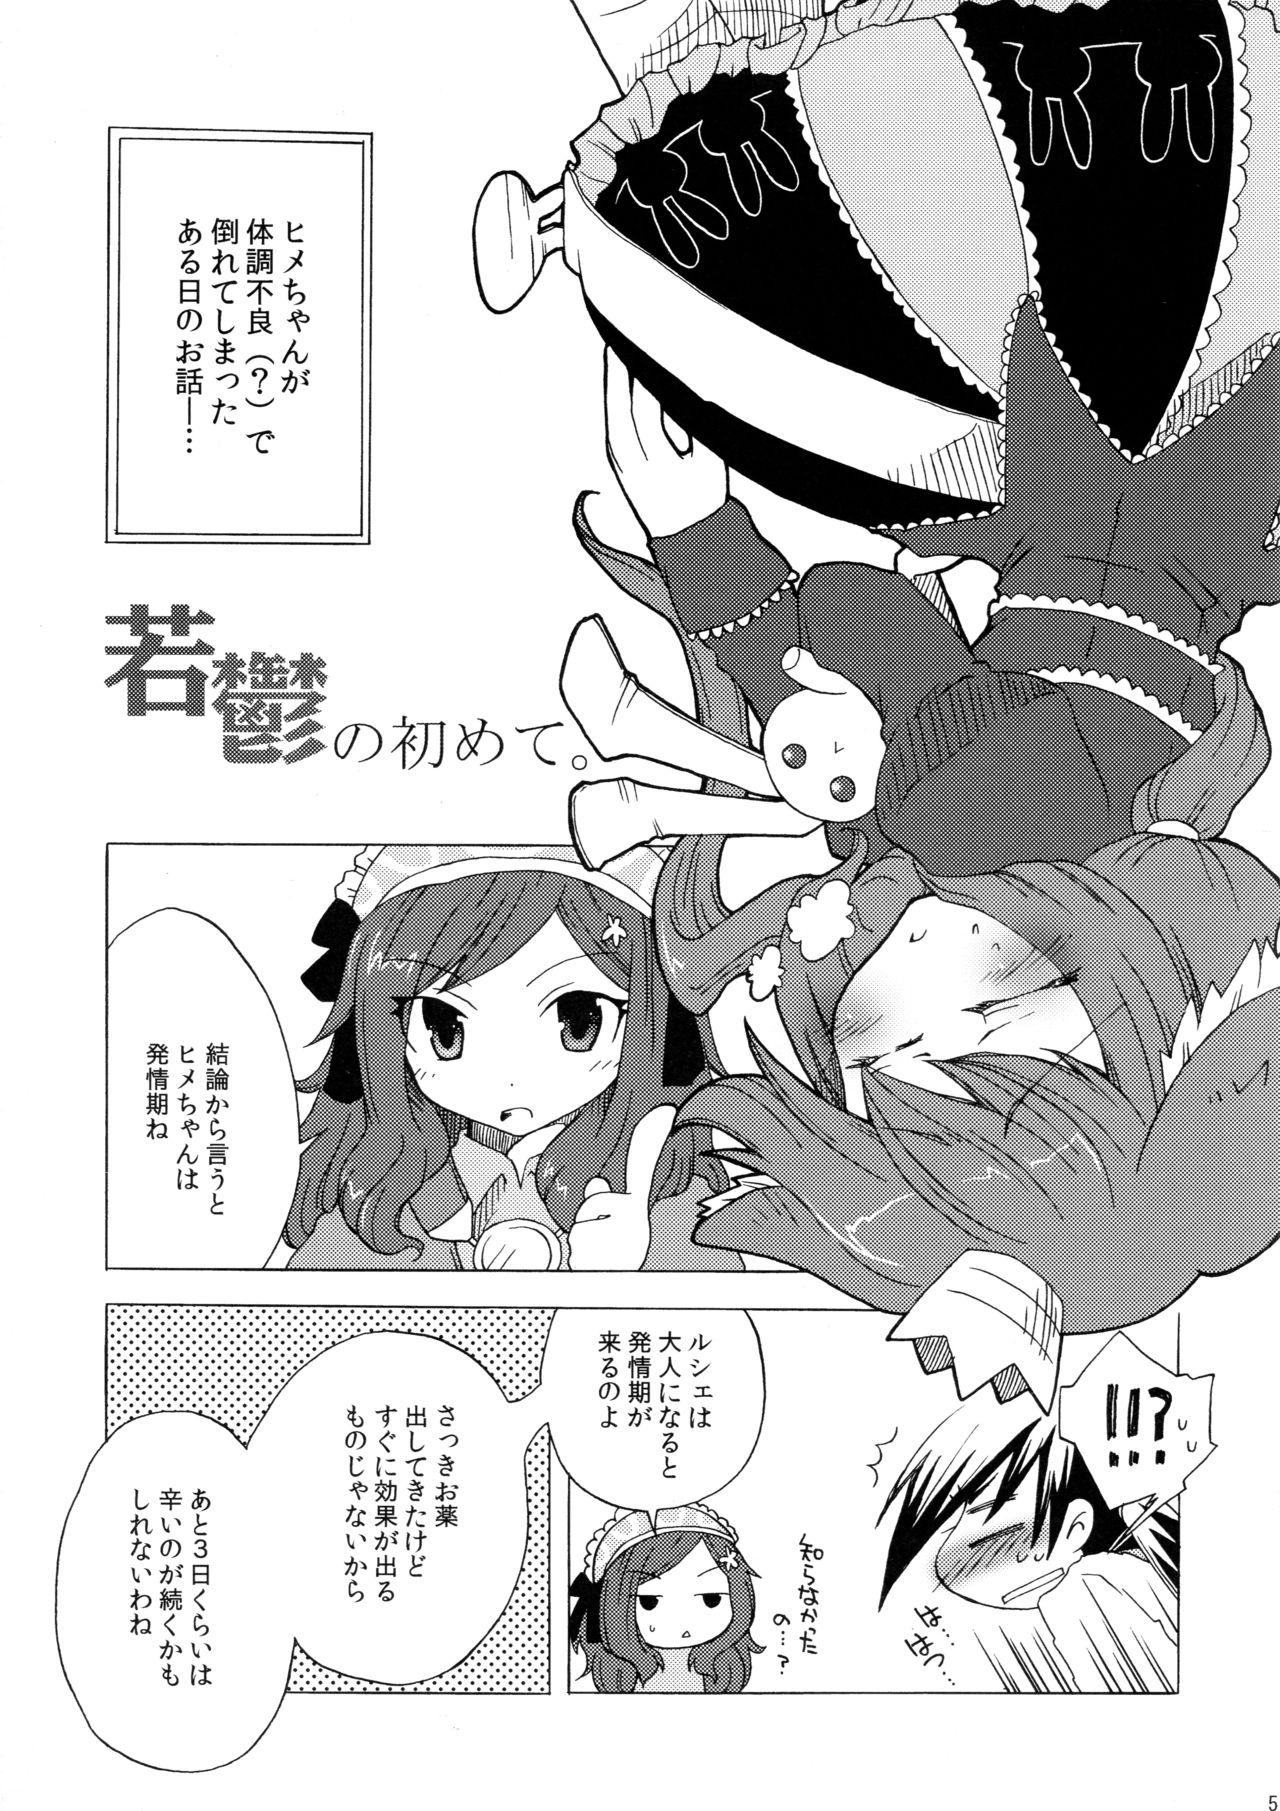 Lolicon Waka Utsu no Hajimete. - 7th dragon Assfingering - Page 5